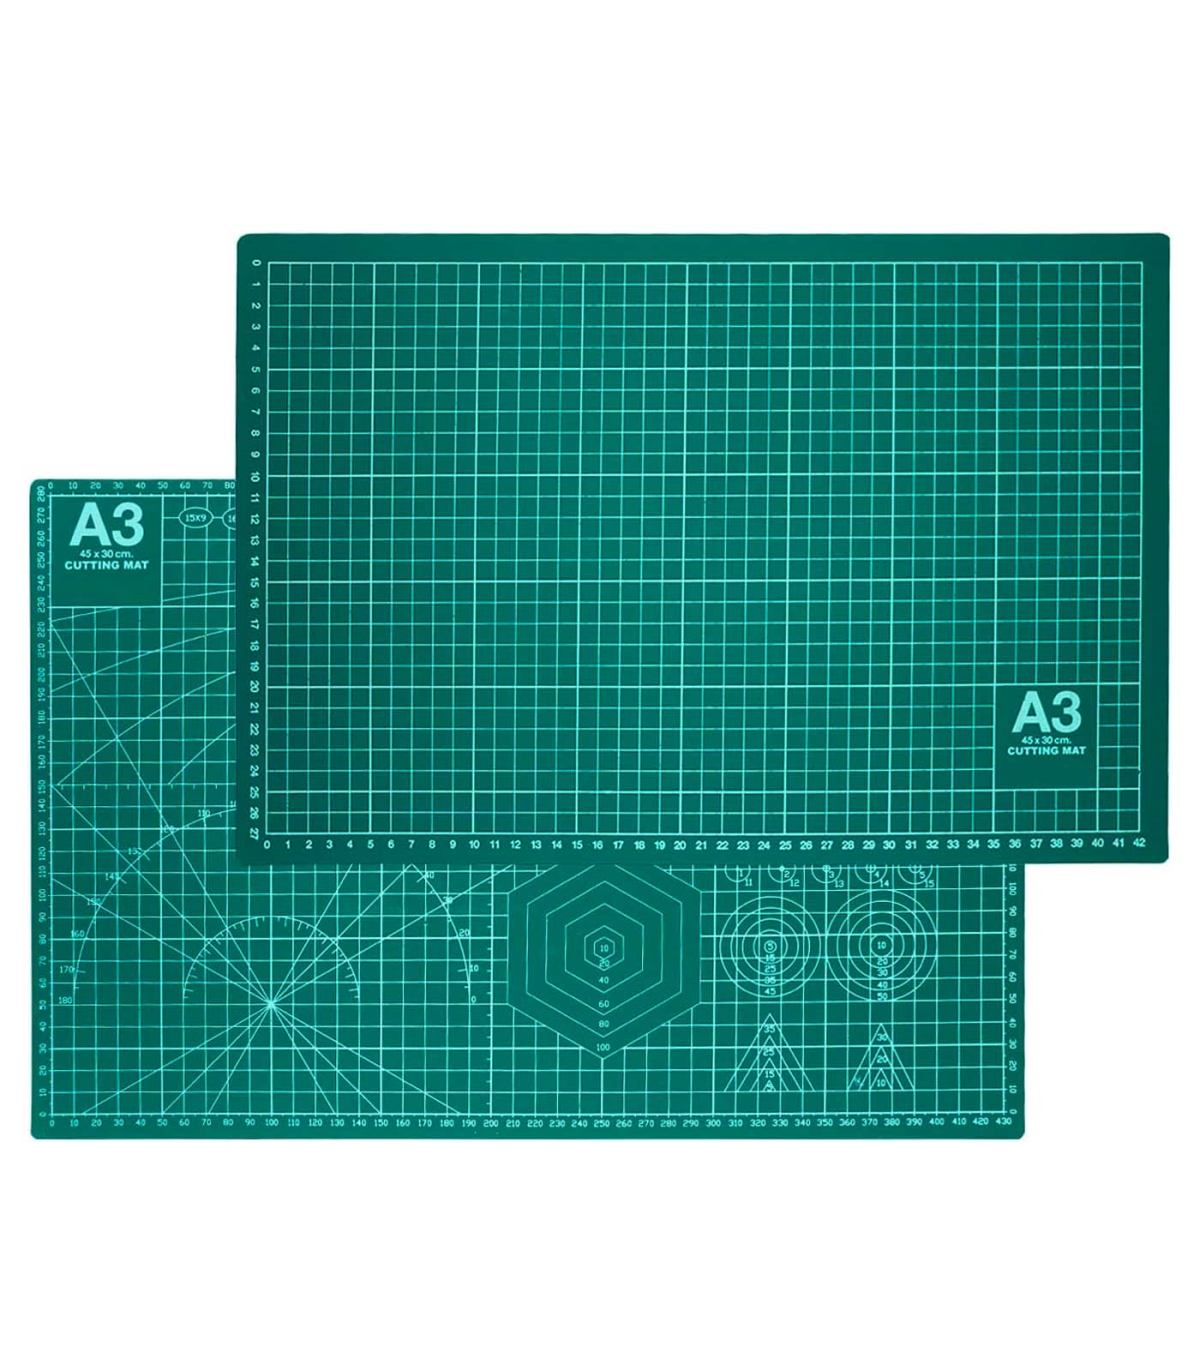 Tradineur - Tabla de corte, autocicatrizante, base para patchwork